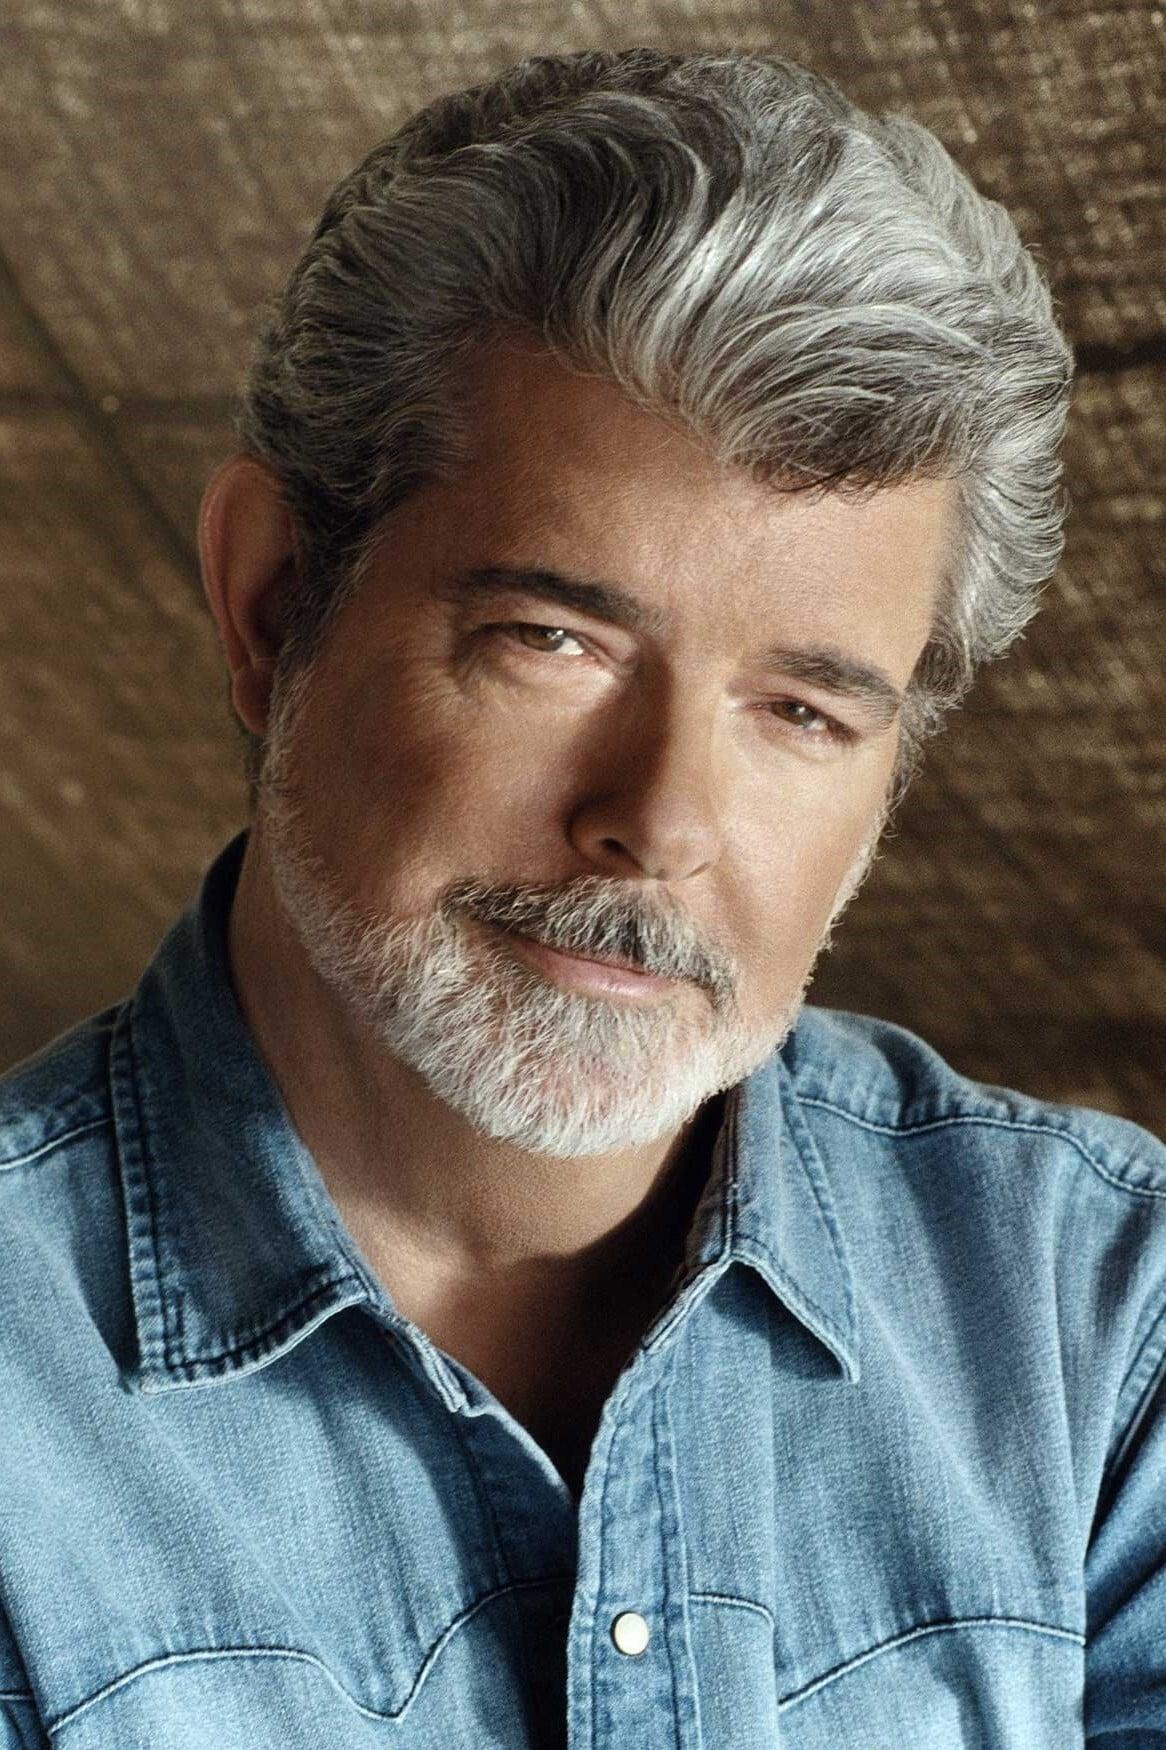 George Lucas | Director